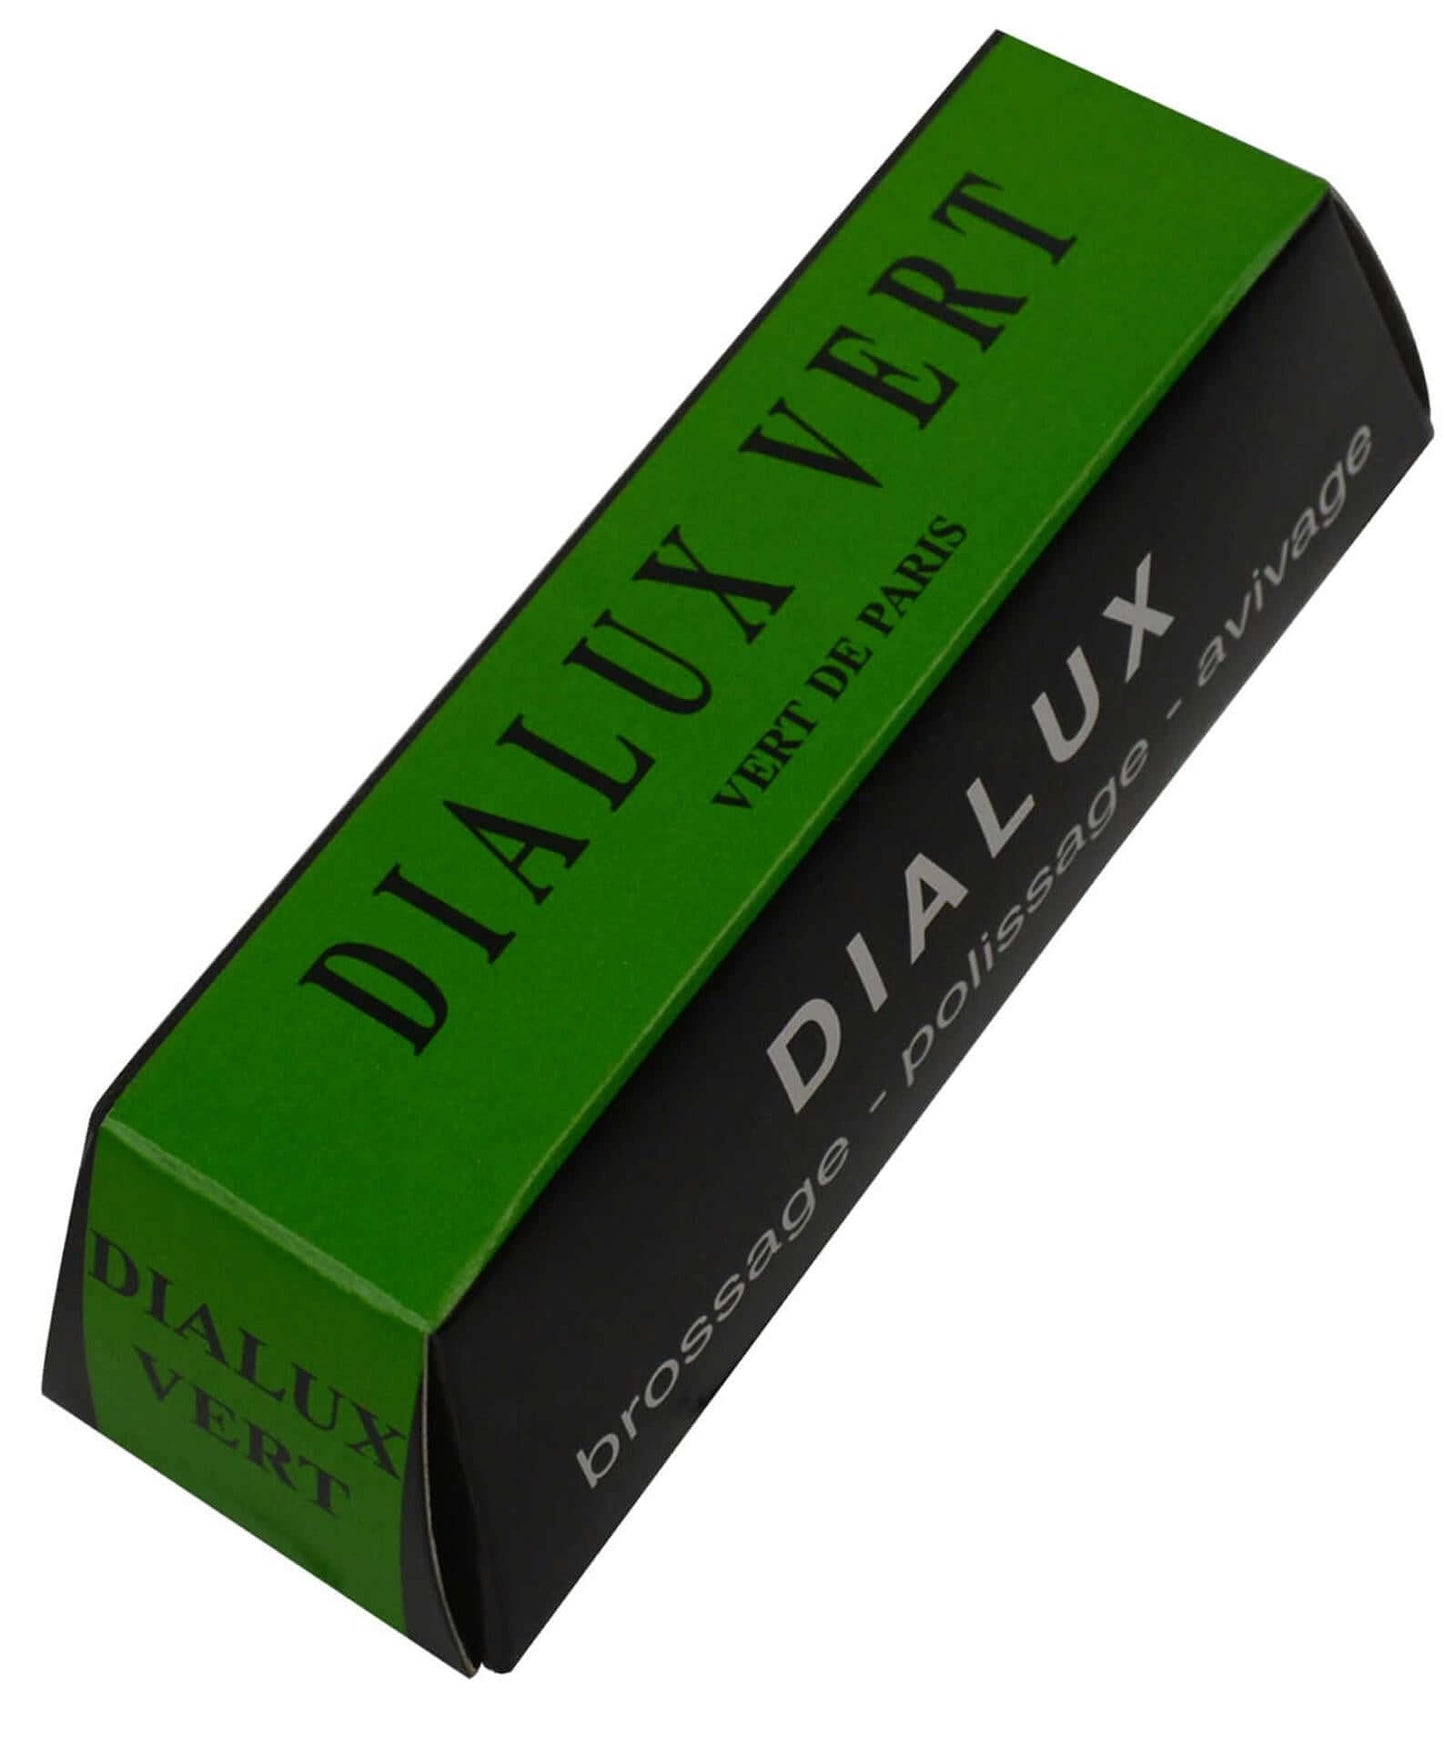 Dialux Polishing Compound / Rouges Dialux